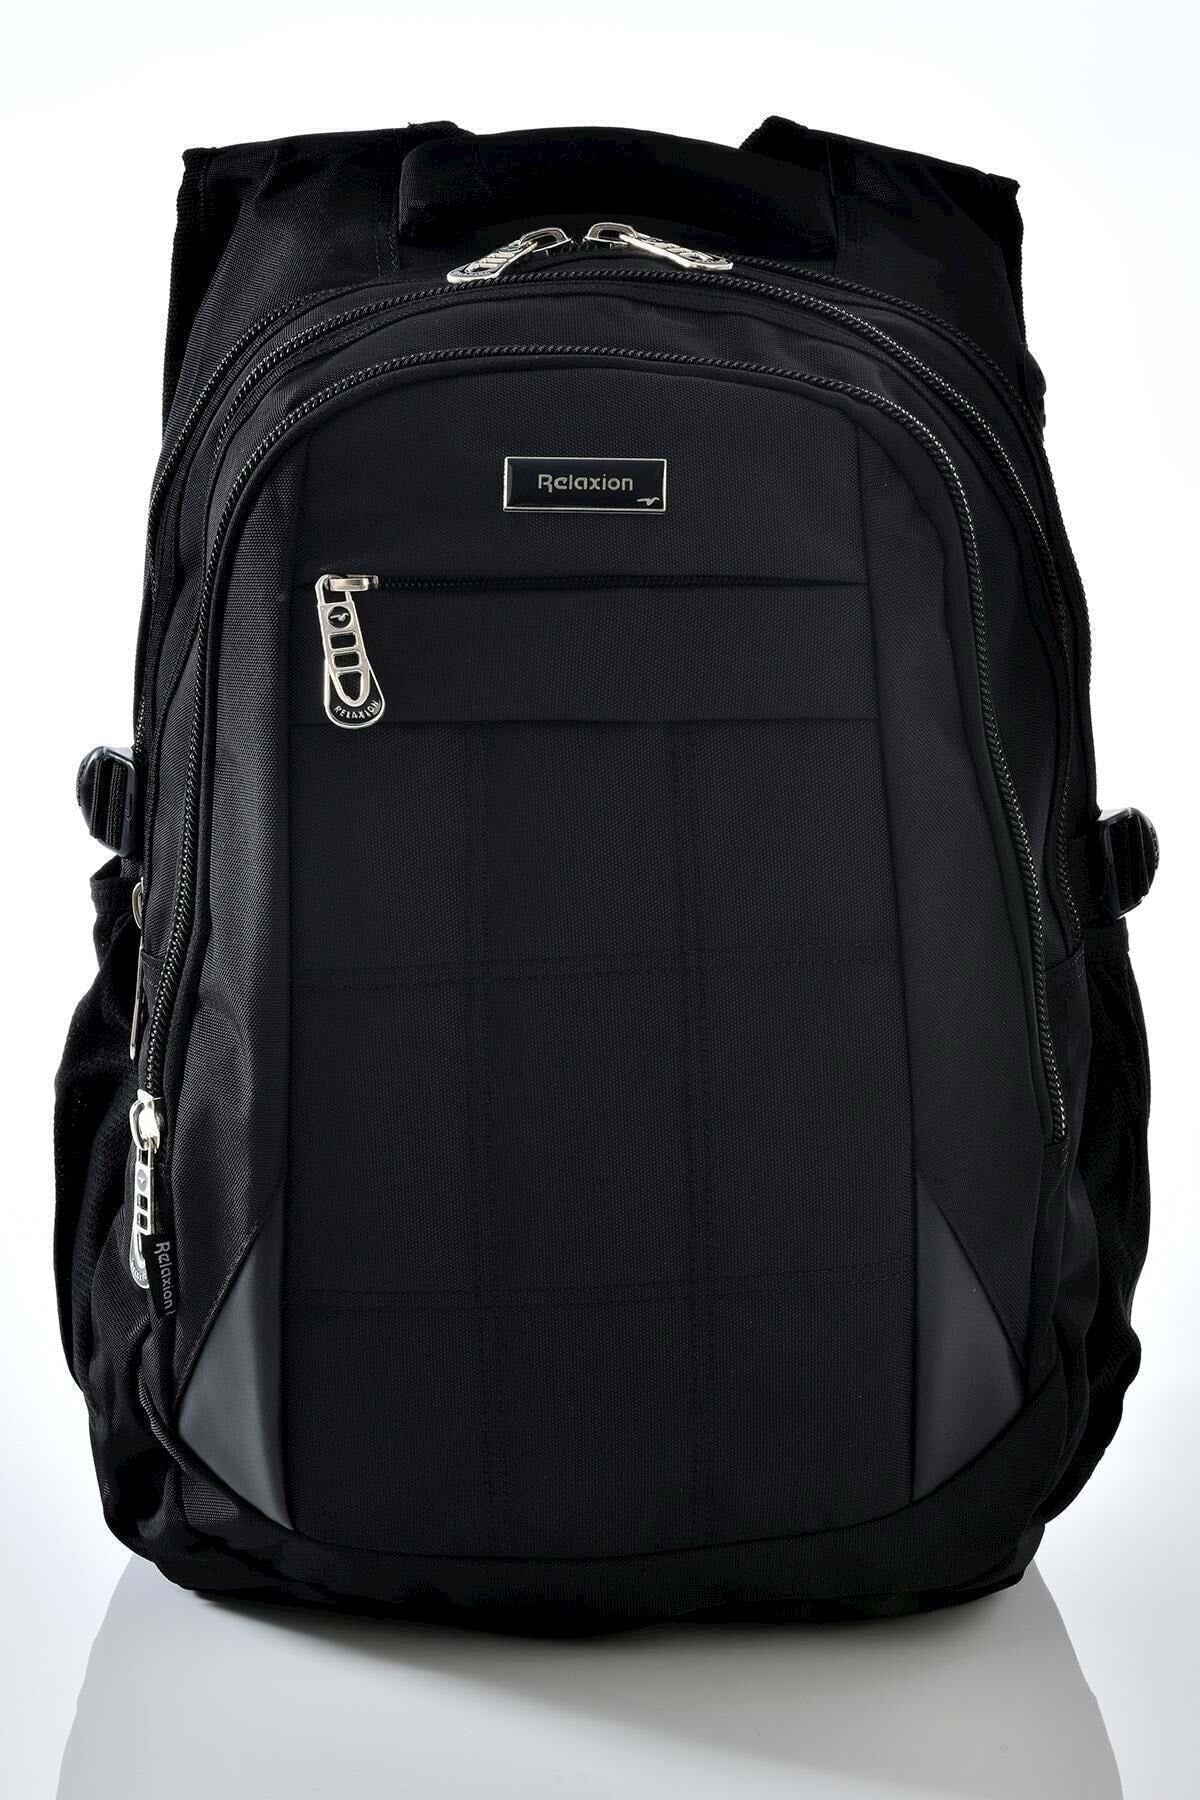 Casual Unisex Backpack - Black 2227